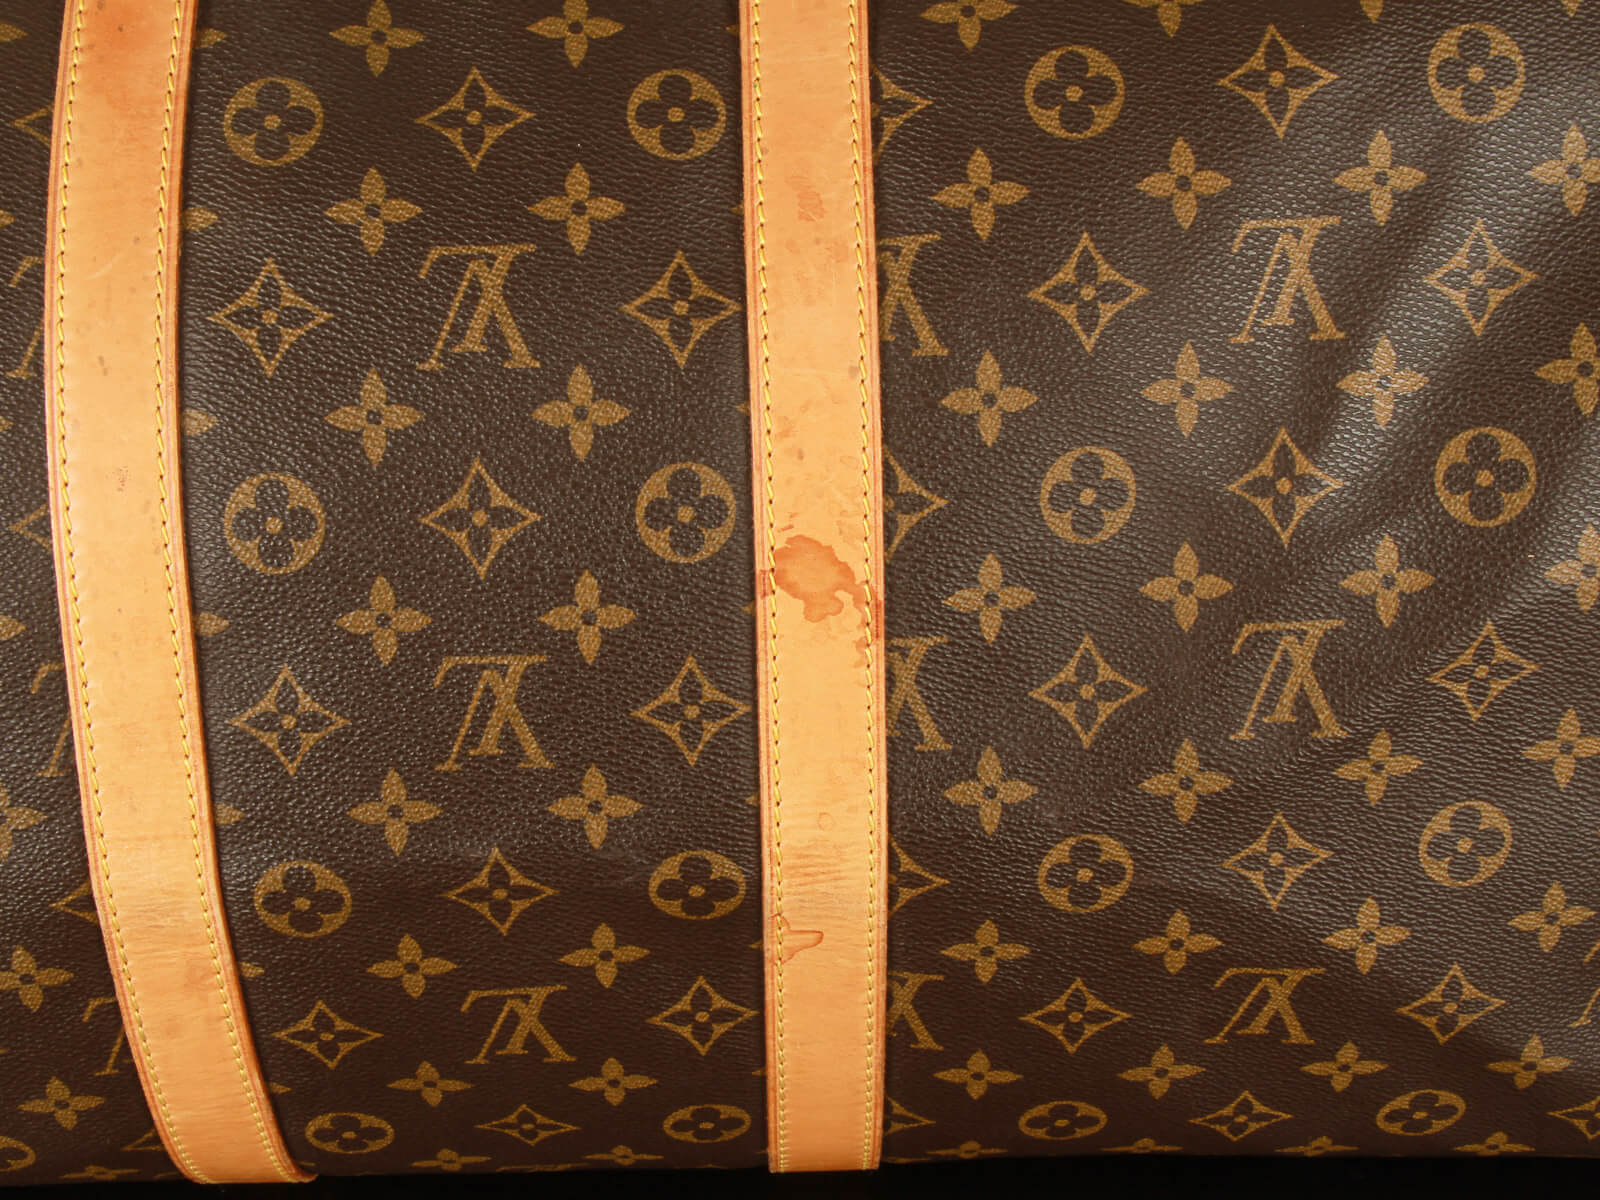 Louis-Vuitton-Monogram-Keep-All-55-Boston-Bag-M41424 – dct